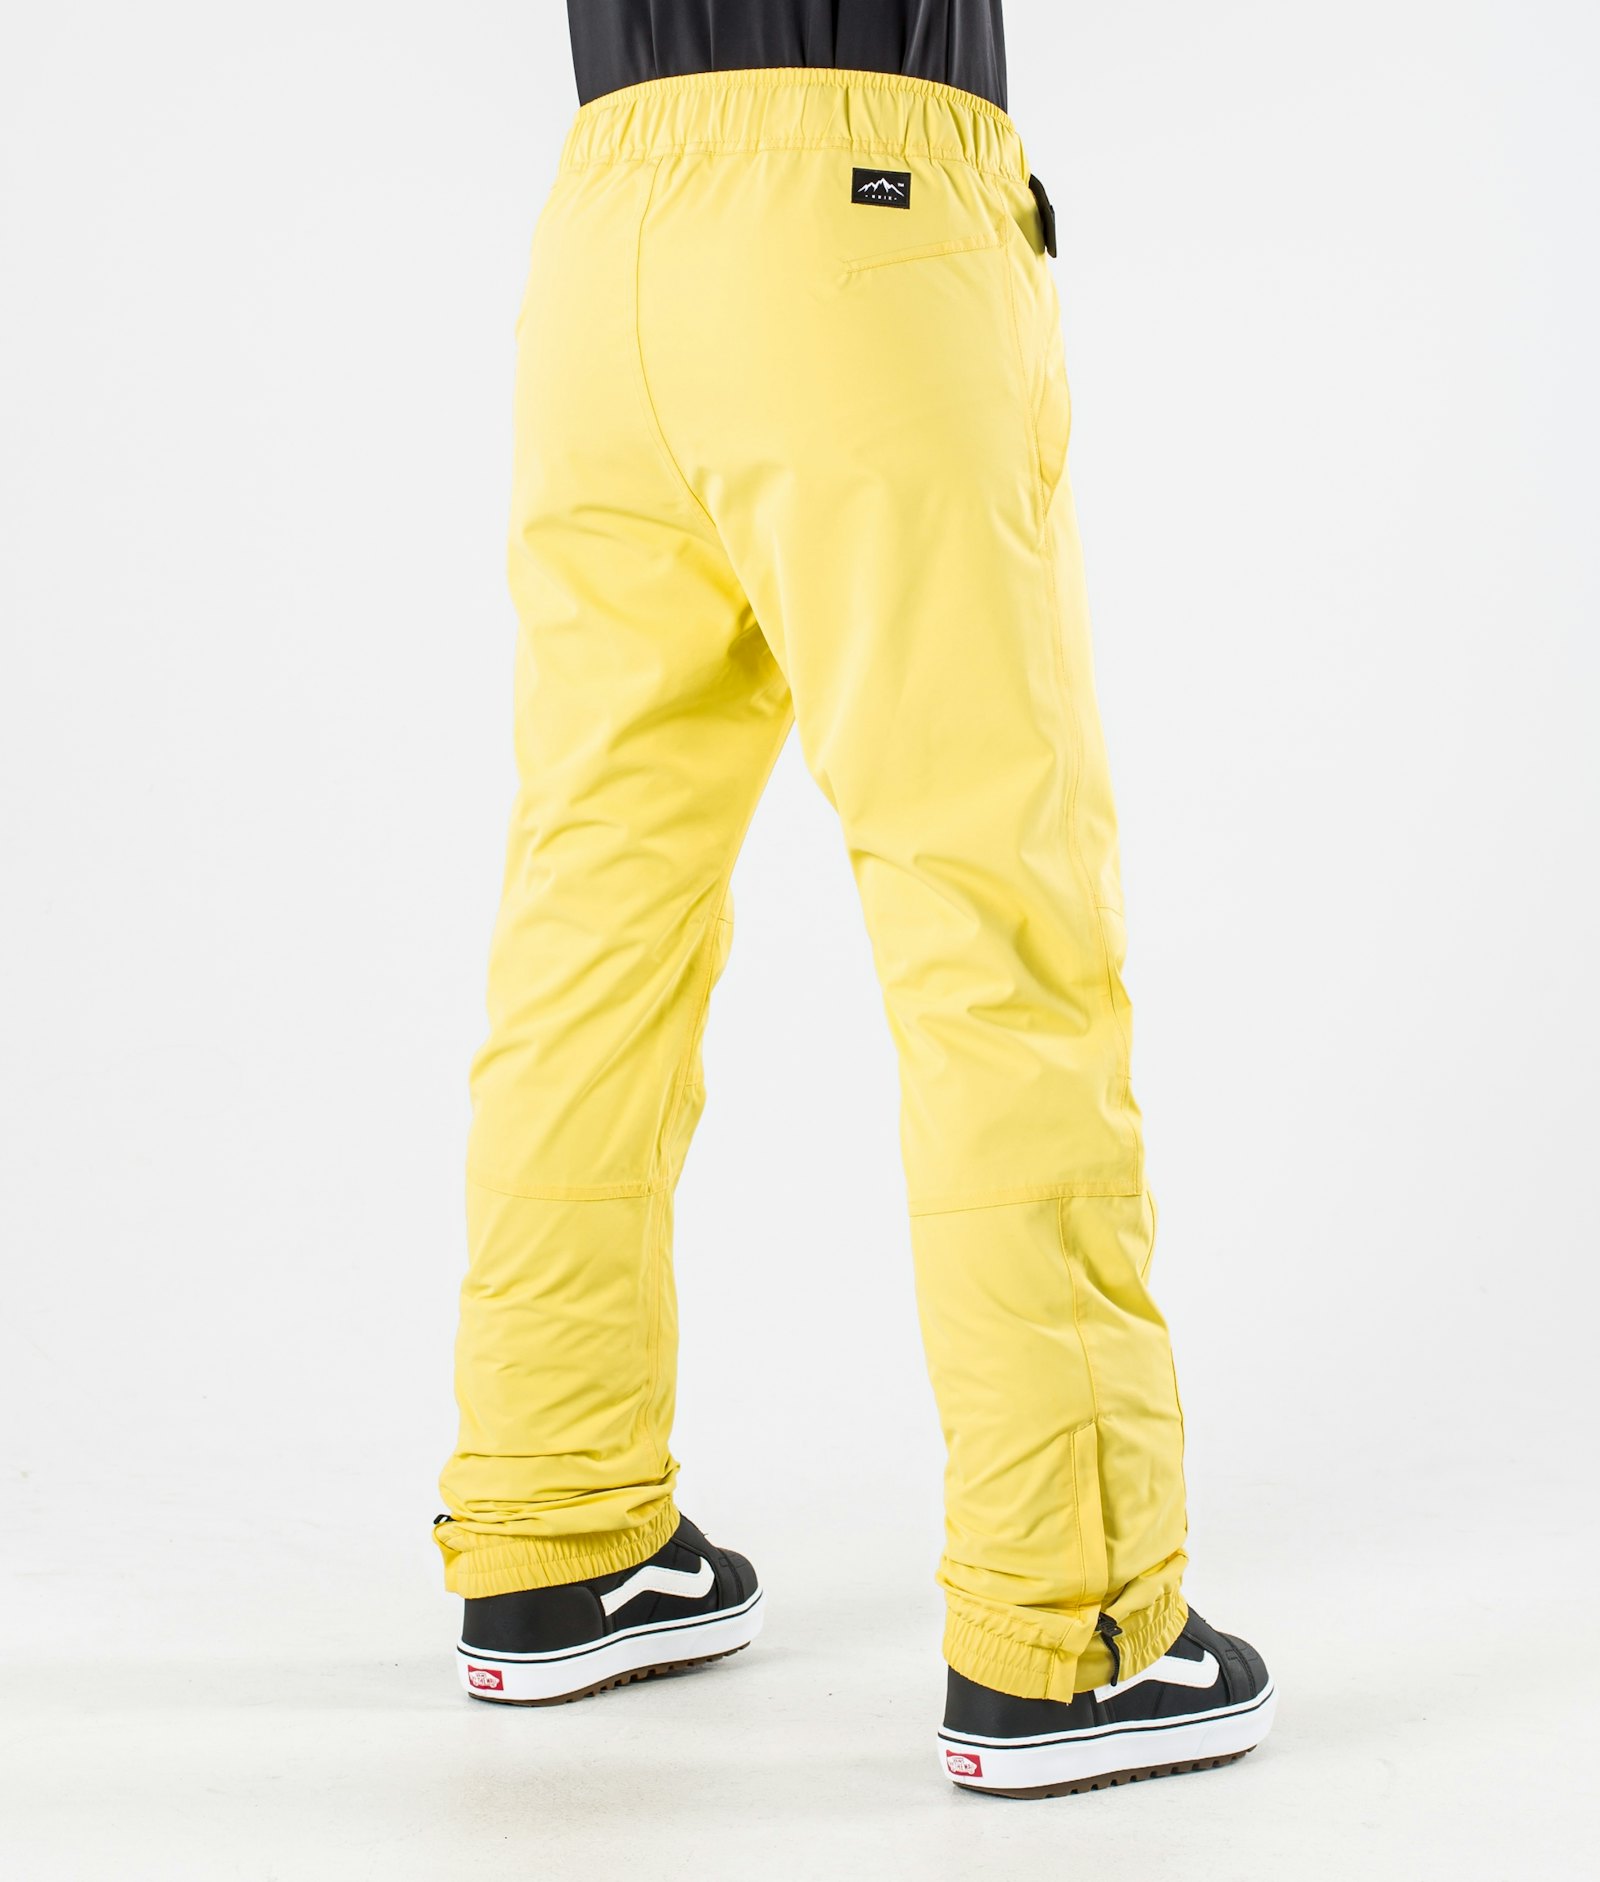 Blizzard W 2020 Pantalon de Snowboard Femme Faded Yellow